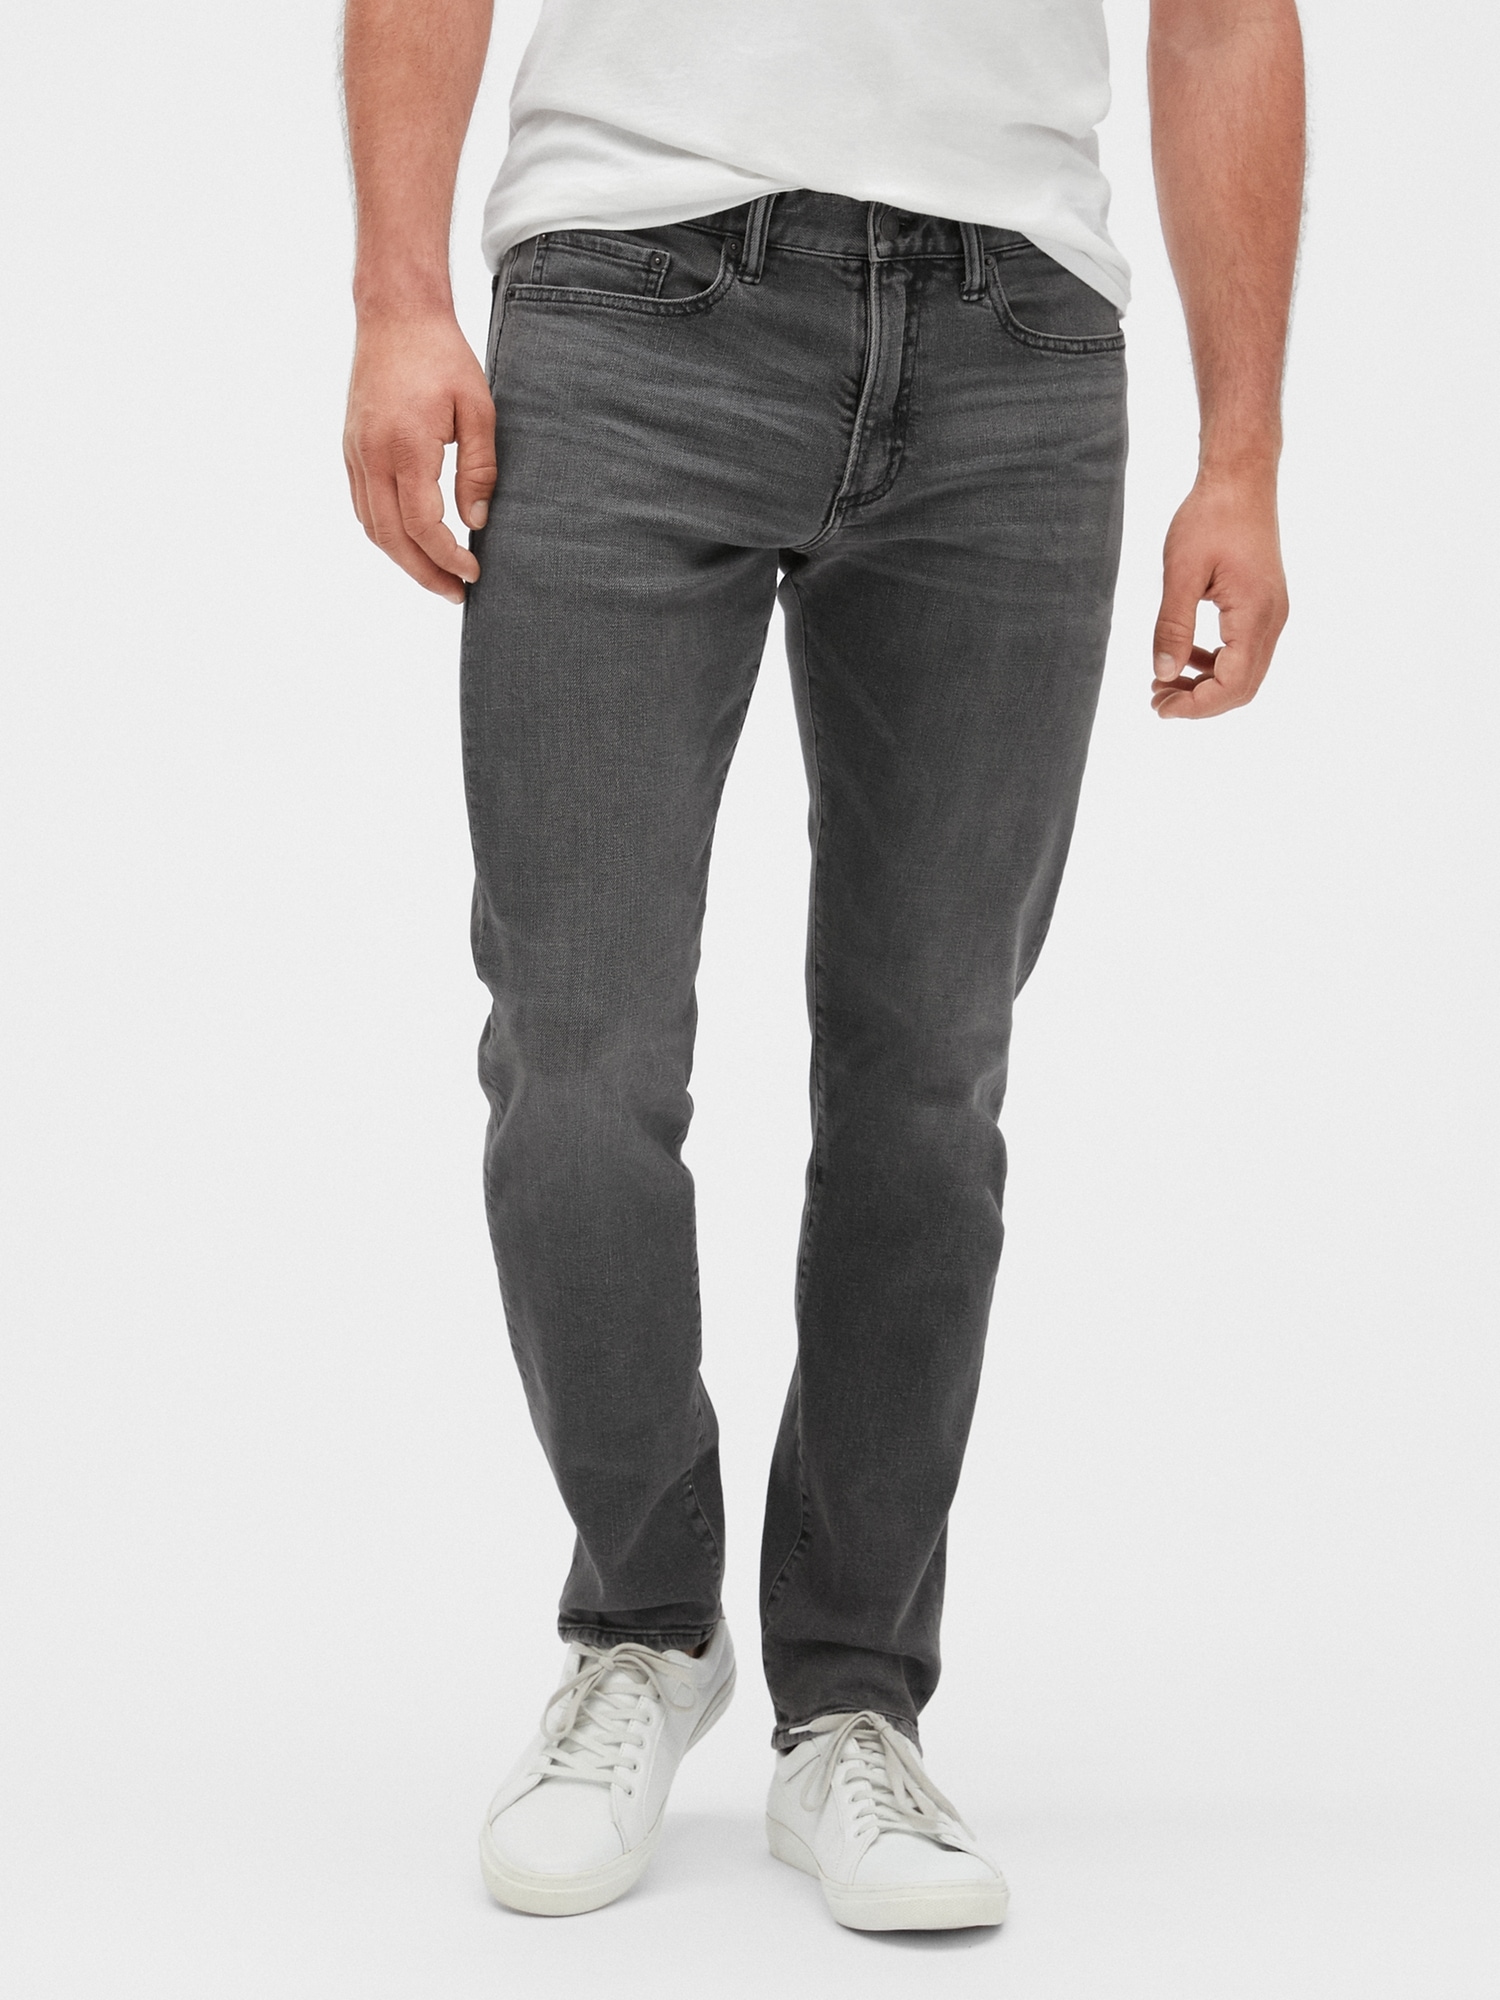 Slim Gapflex Jeans with Washwell™ | Gap Factory